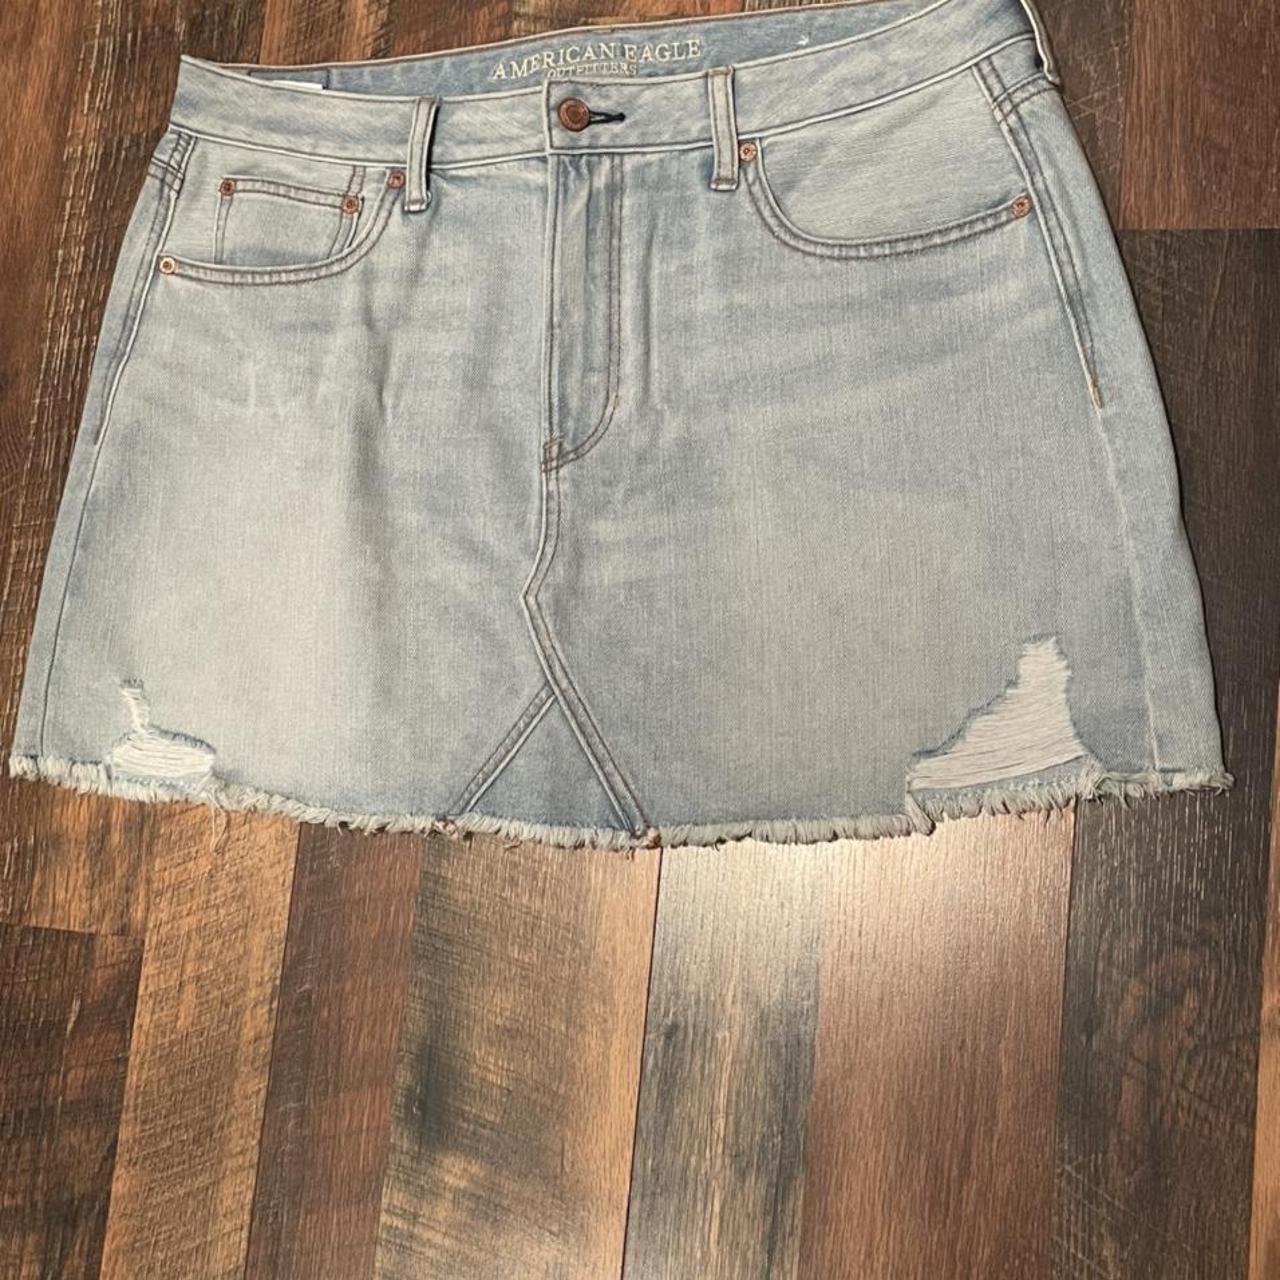 American eagle jean skirt size 14! Never worn.... - Depop